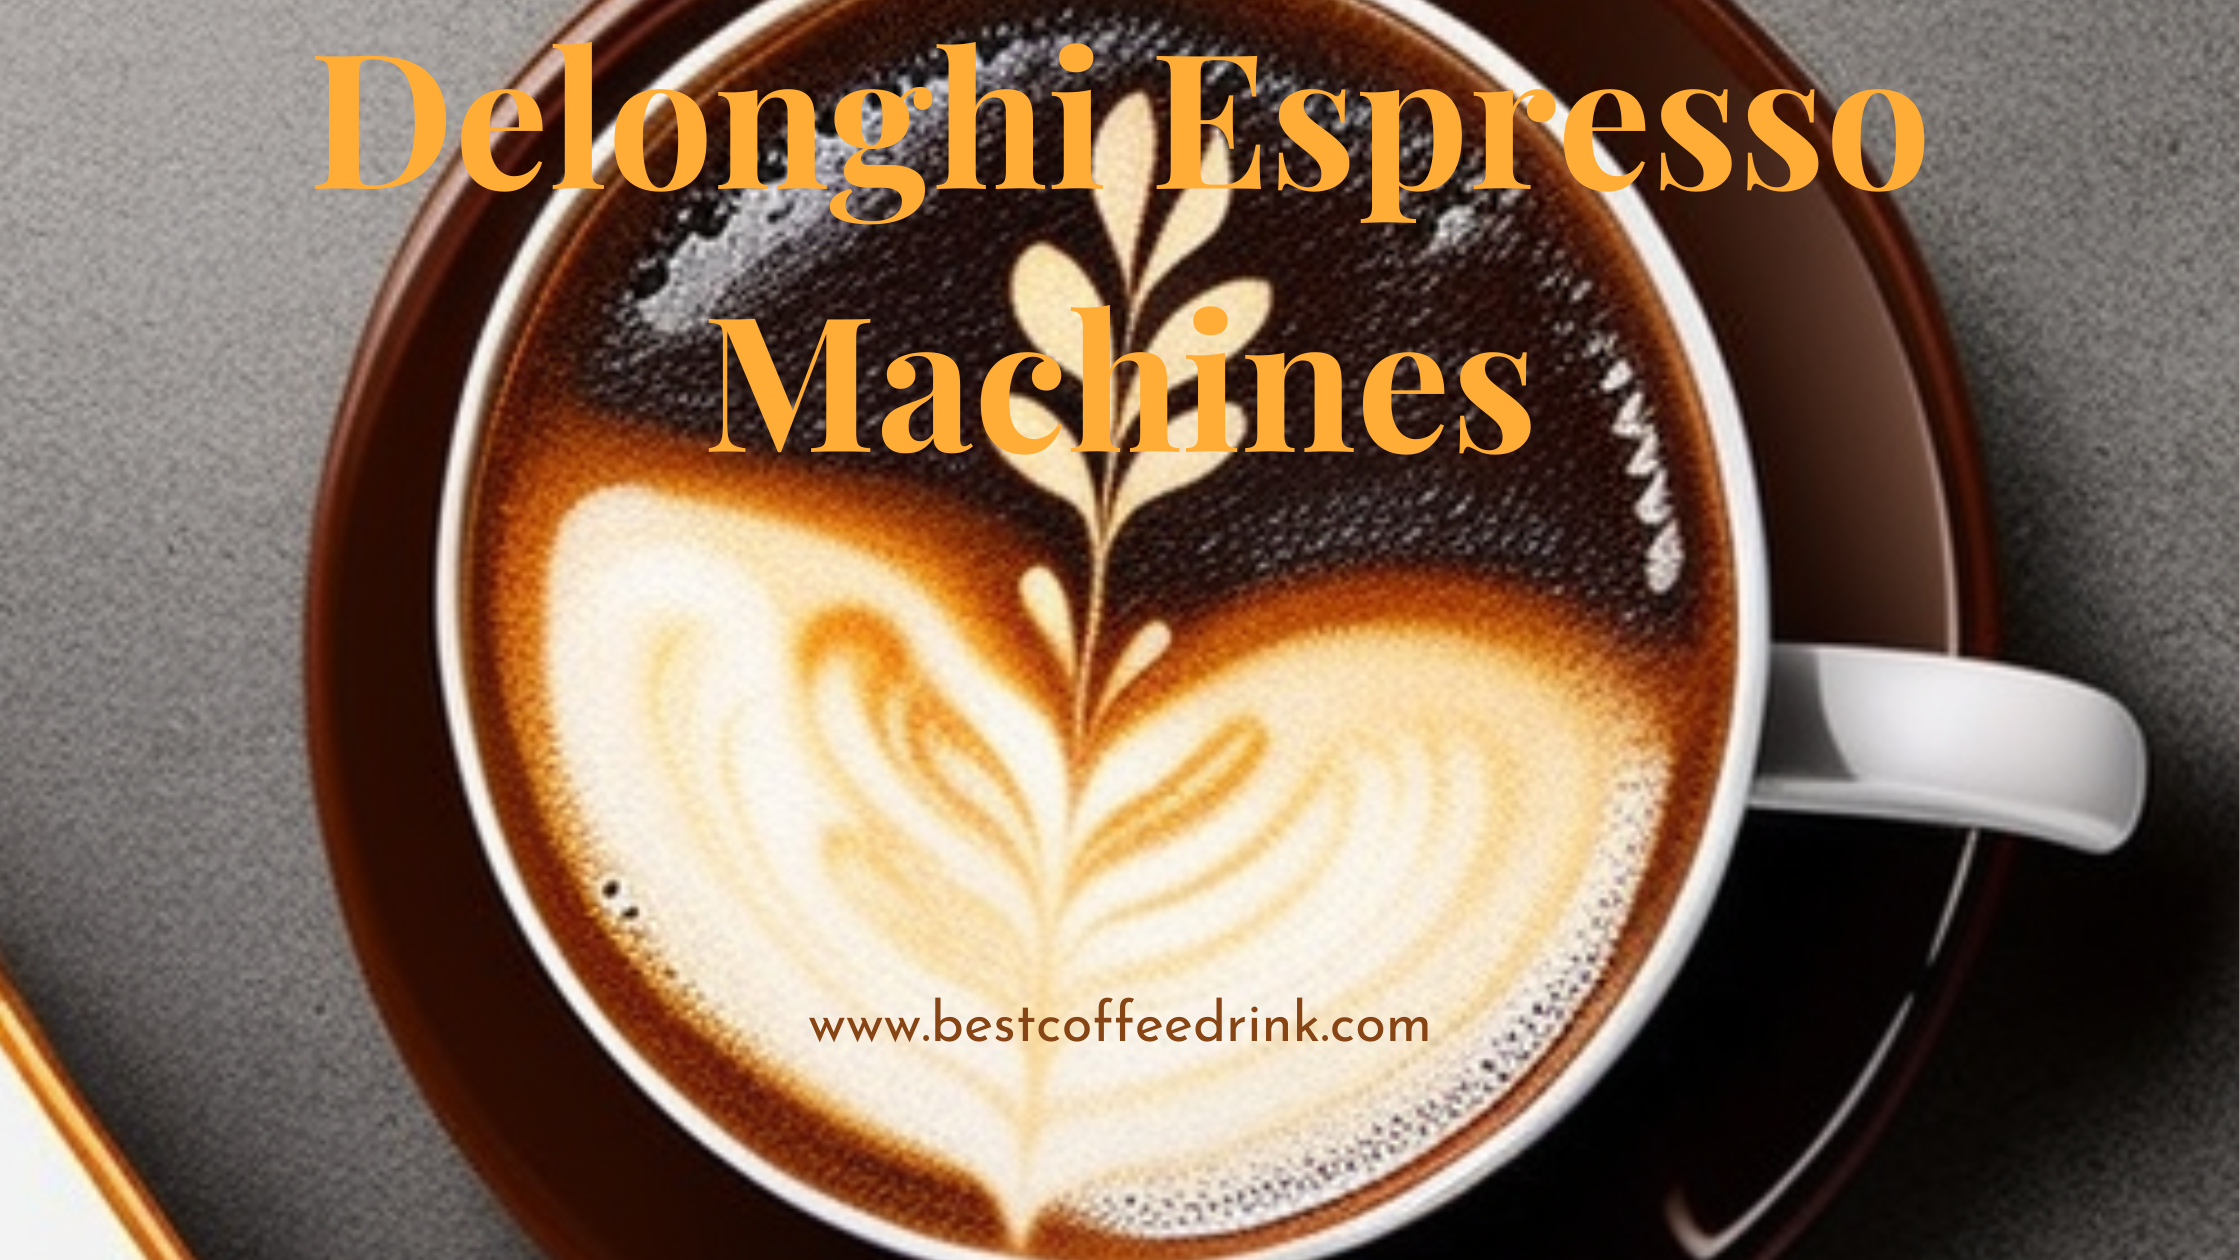 Delonghi espresso machines